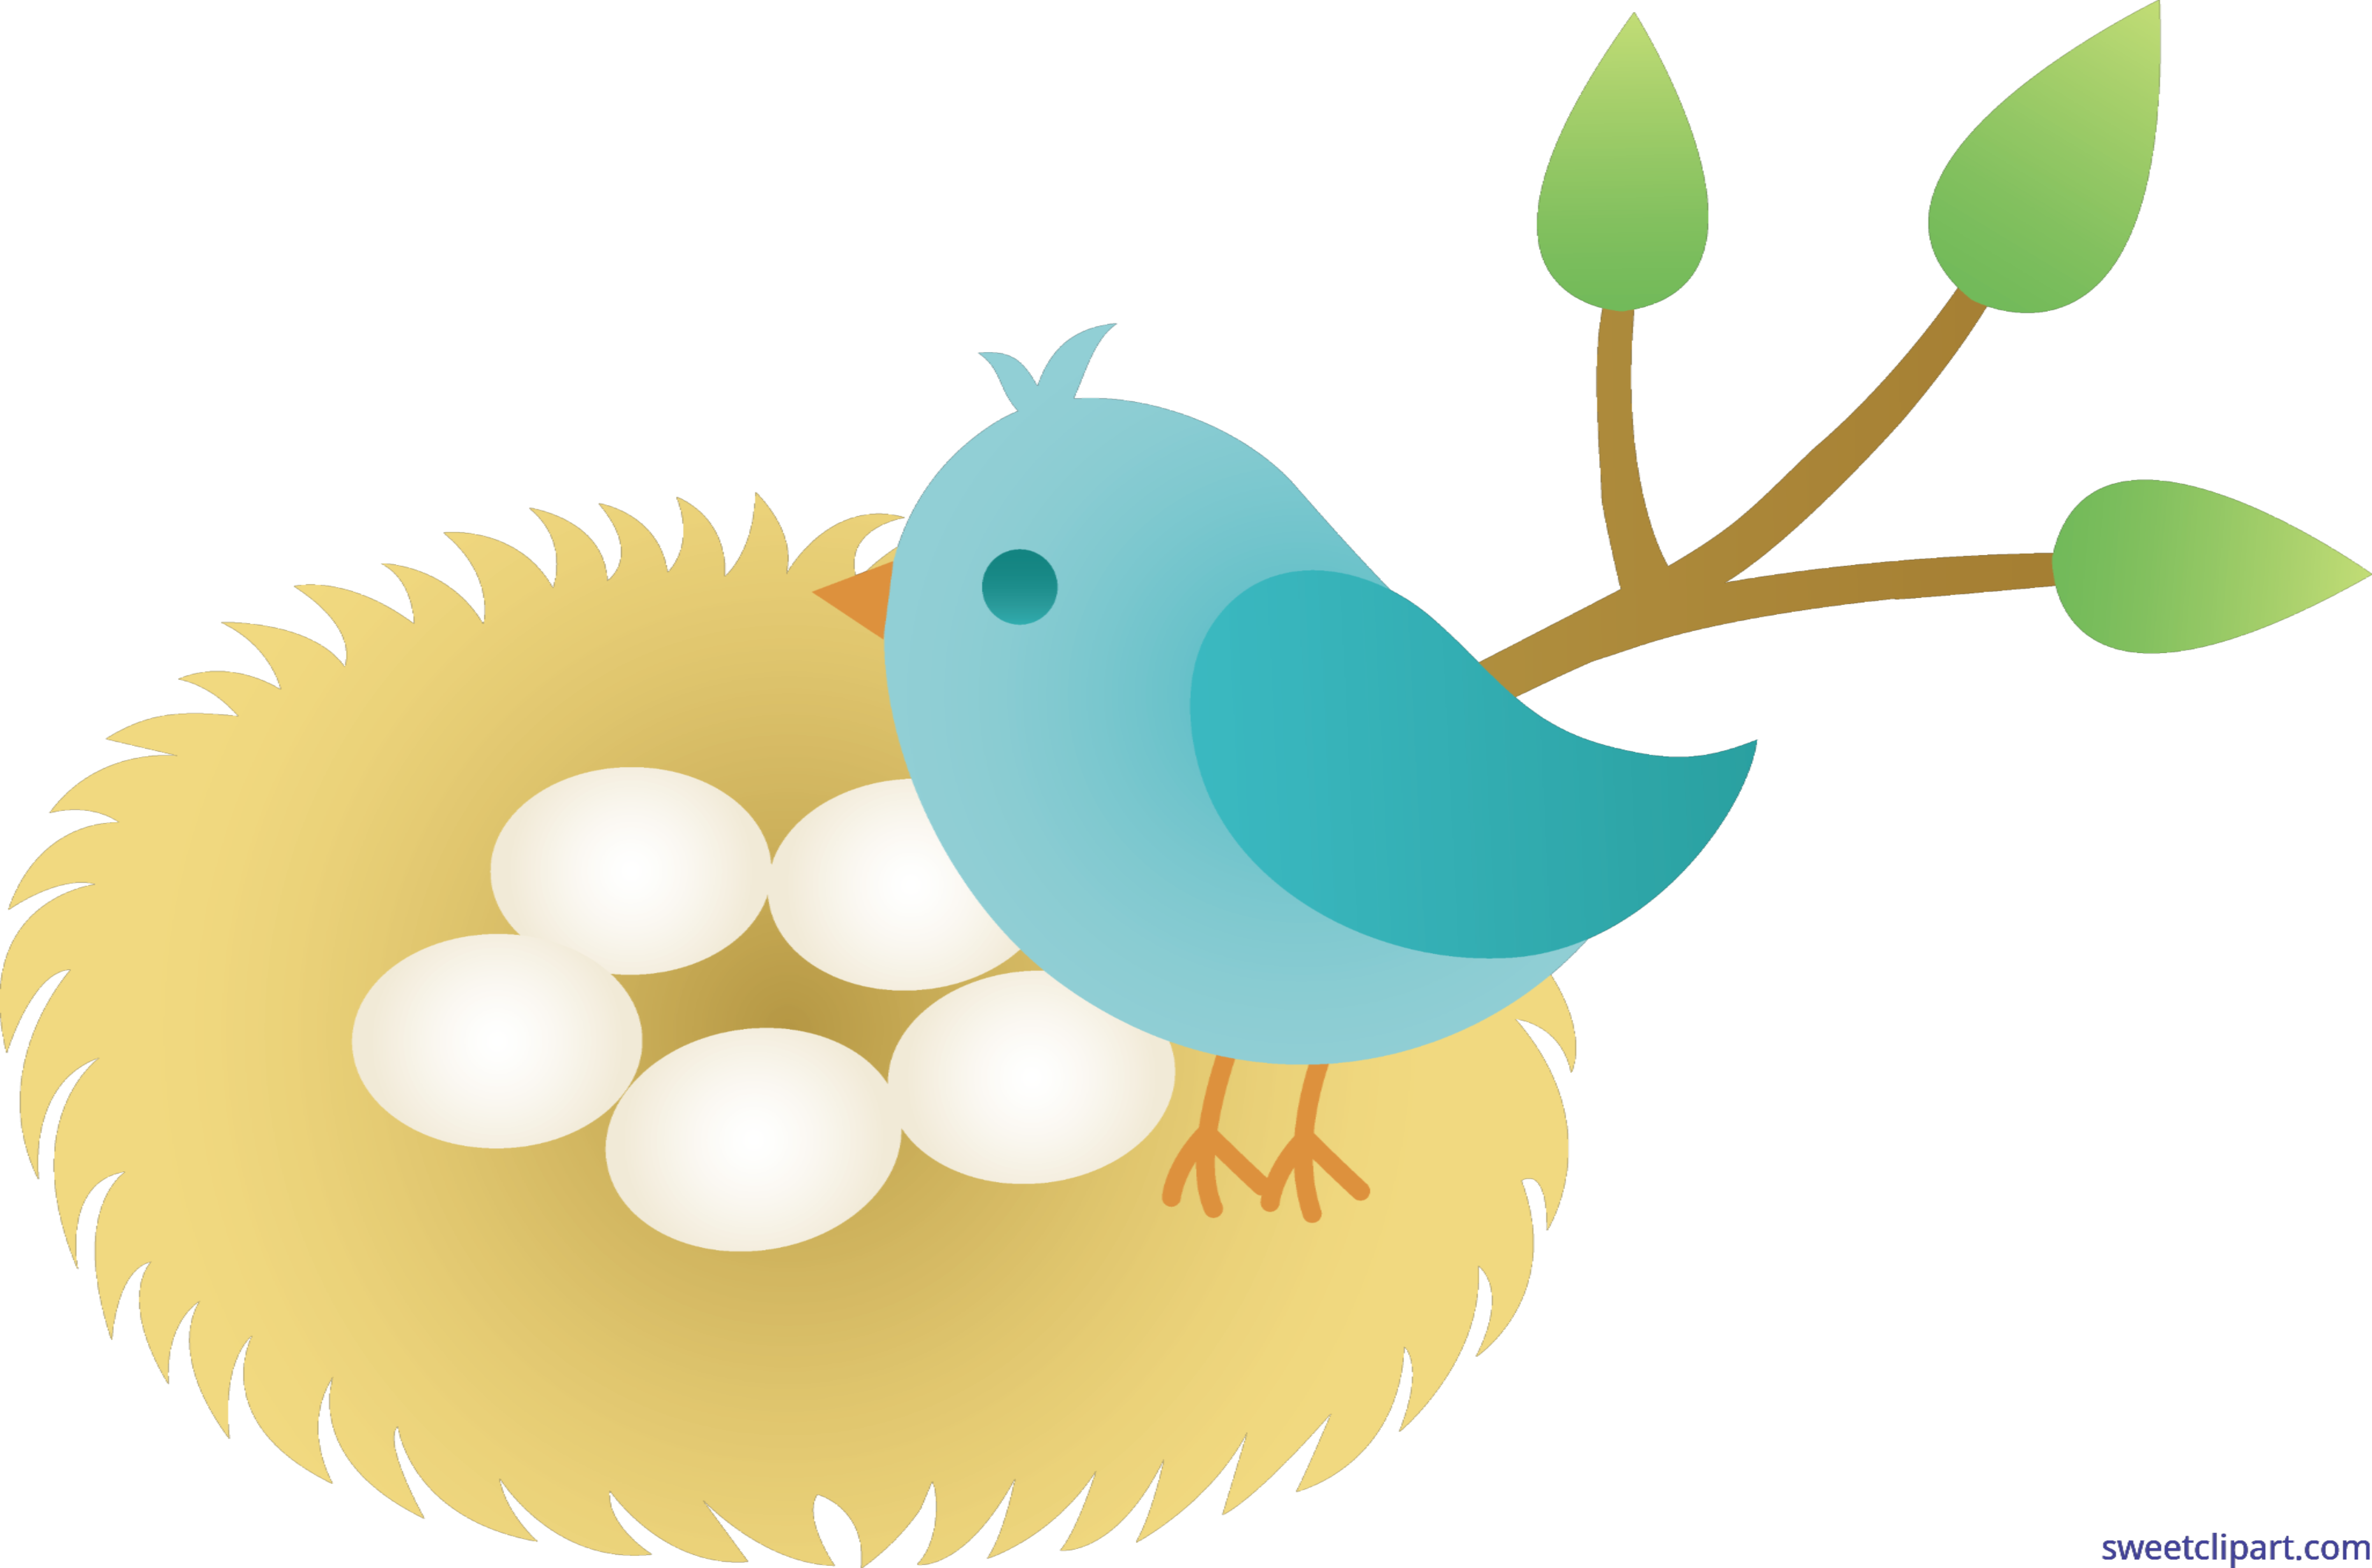 Unconditional bird cartoon with. Eggs clipart nest